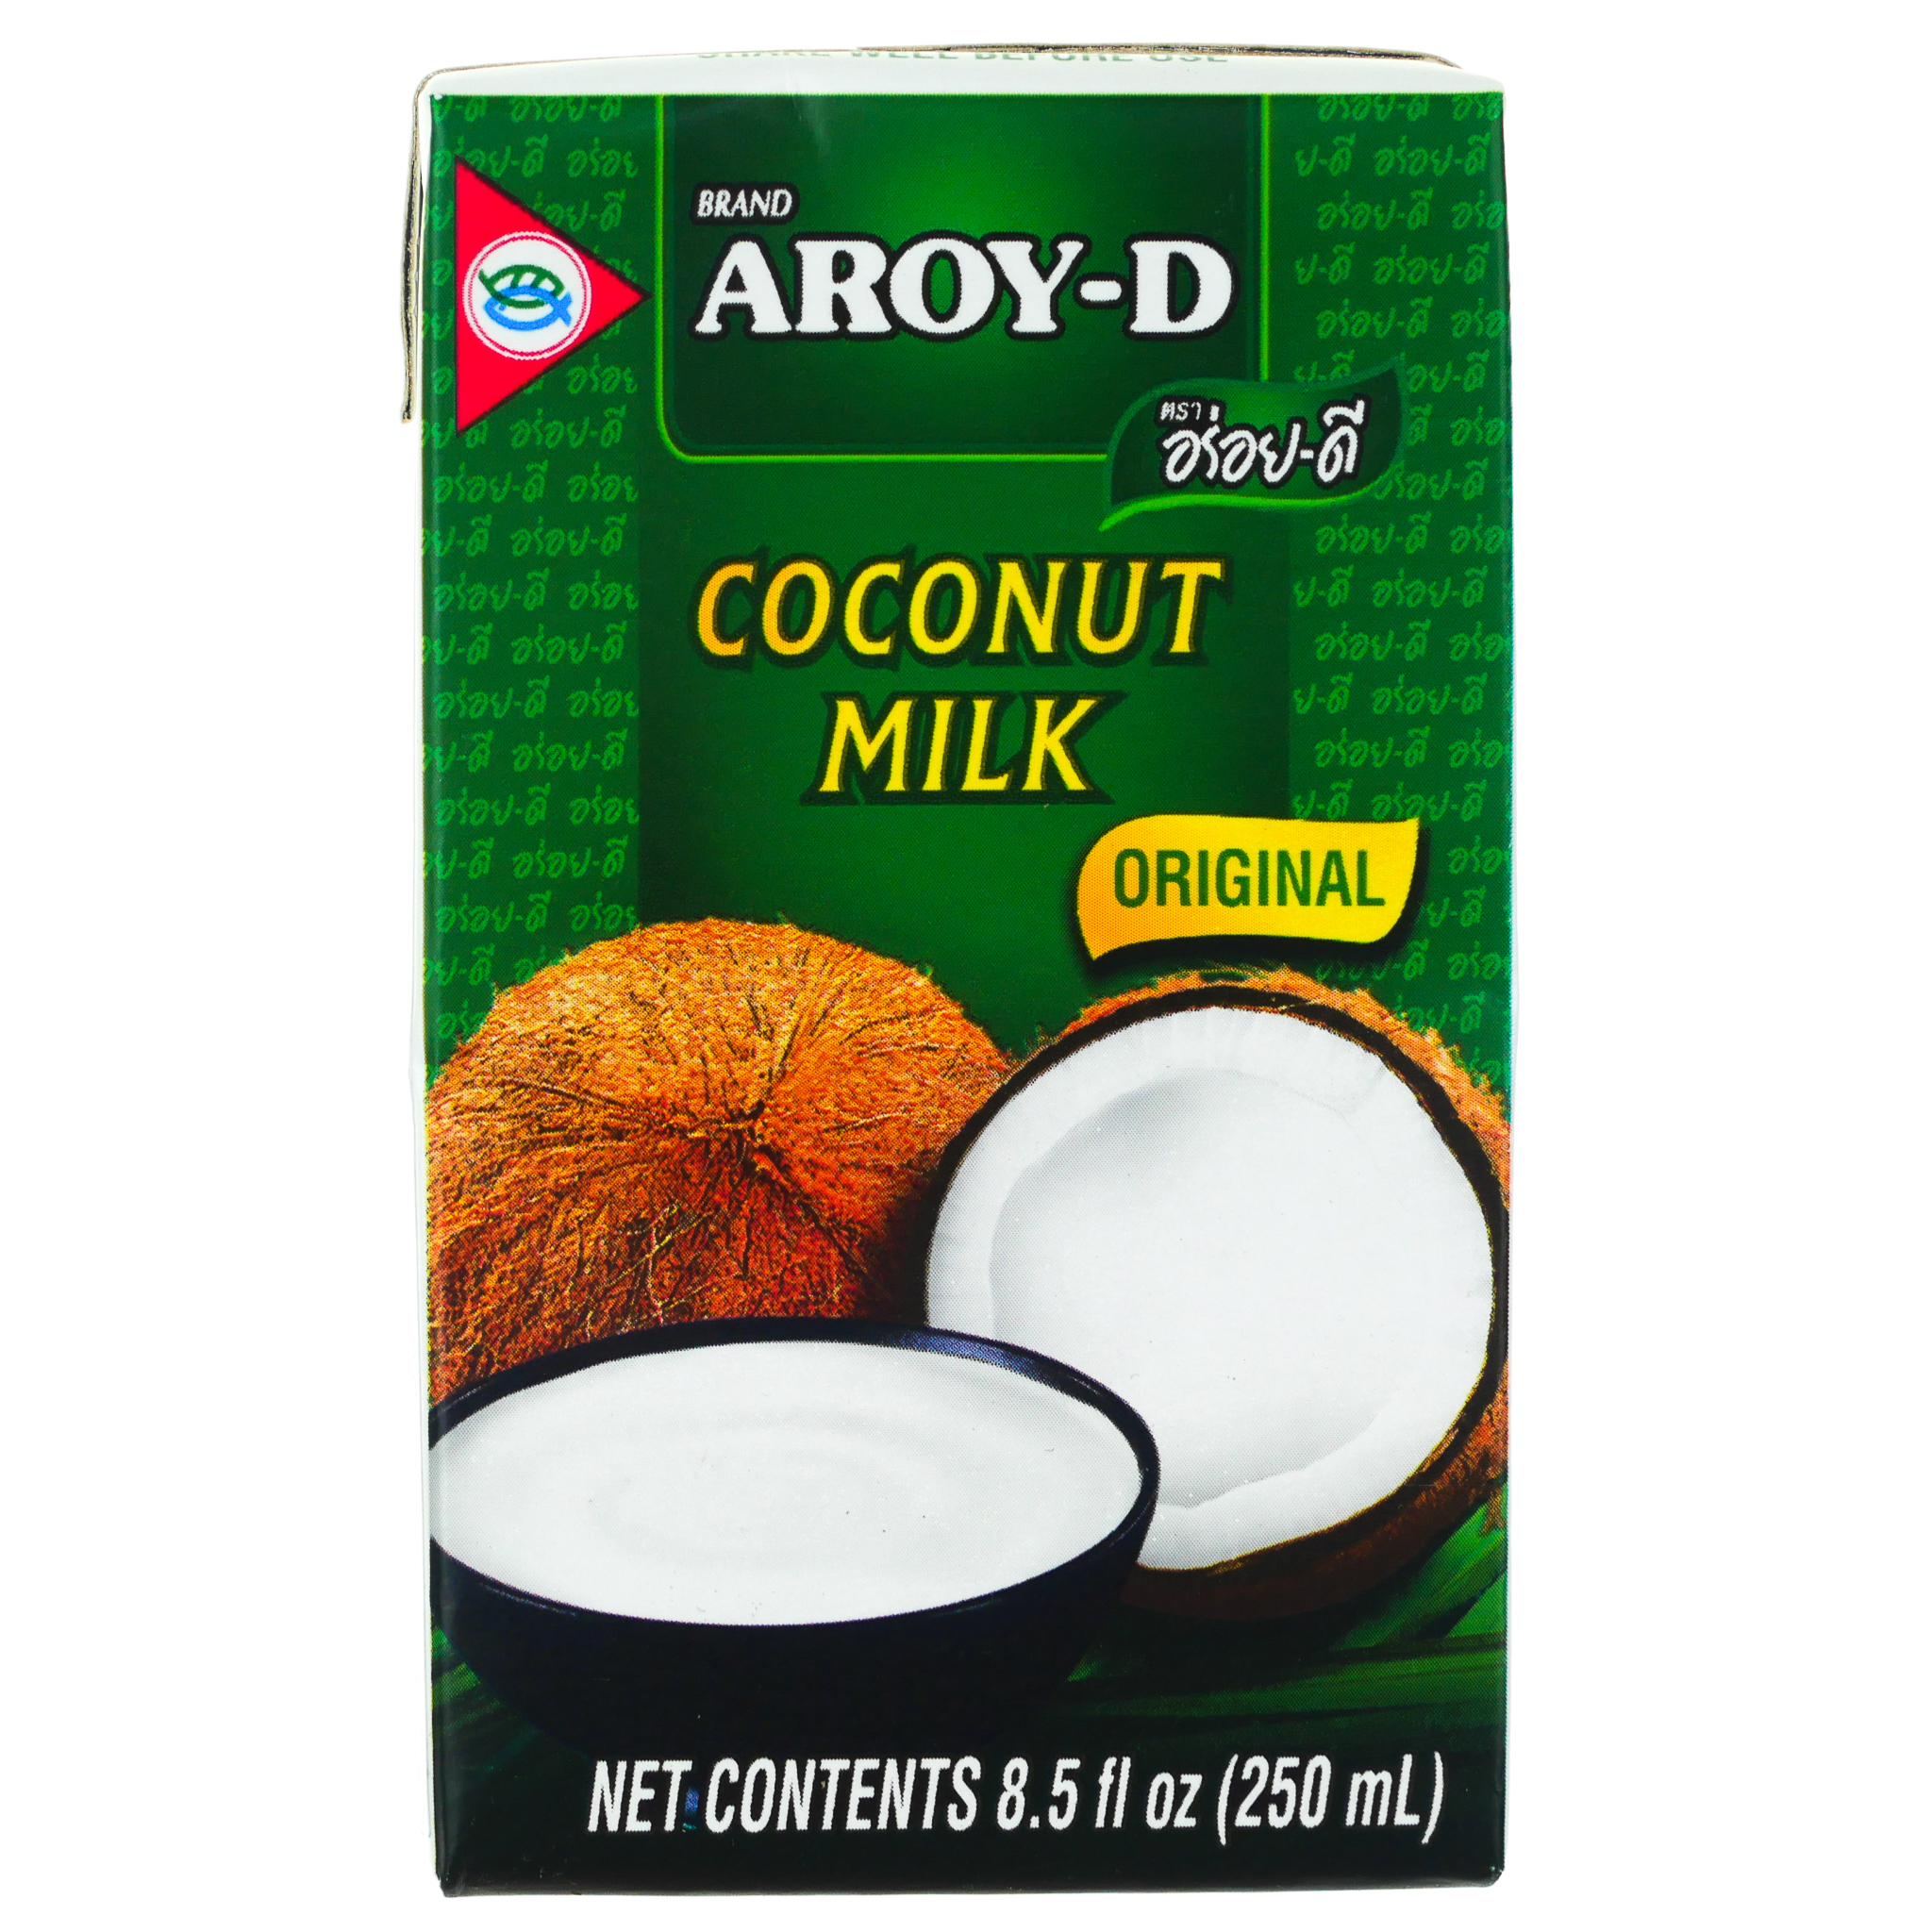 Планто кокосовое молоко. Кокосовое молоко Aroy-d 500 мл. Кокос молоко Aroy-d 60 500 мл. Кокосовое молоко Aroy-d 250мл Tetra. Молоко (Aroy-d) кокосовое 250мл тетра пак.